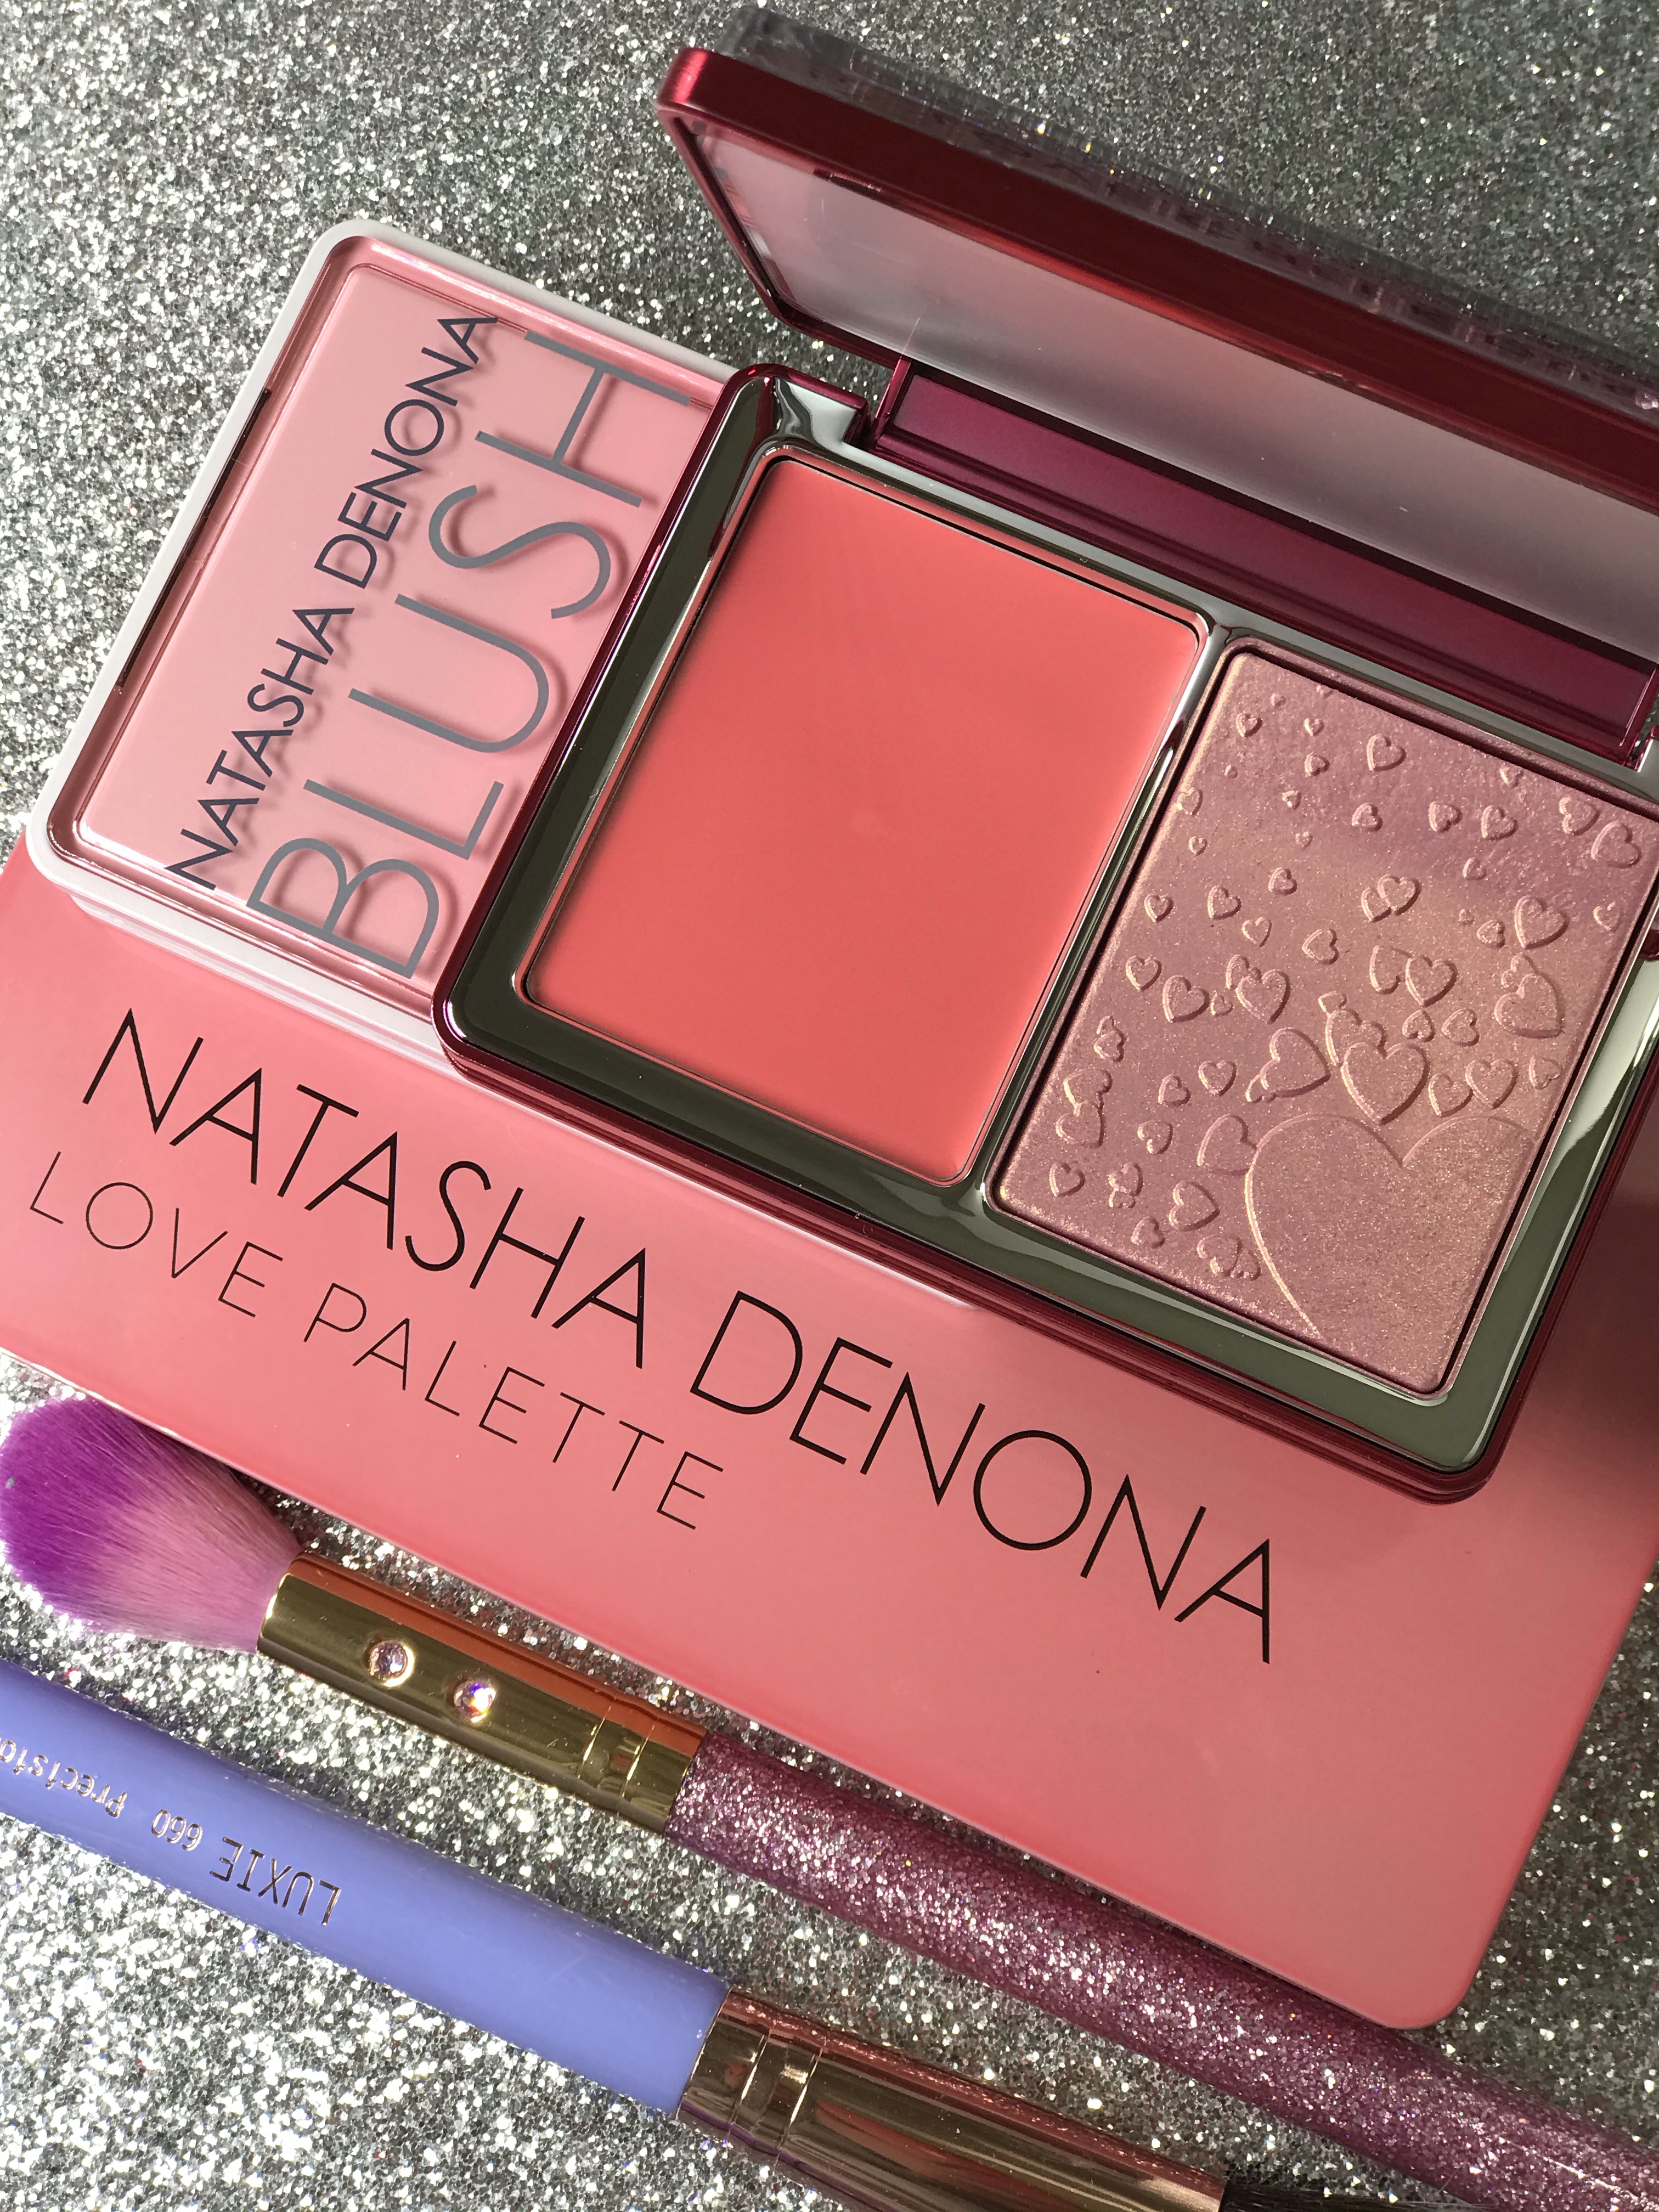 Natasha Denona: Love Cheek Duo Review – Kayla Collects Palettes